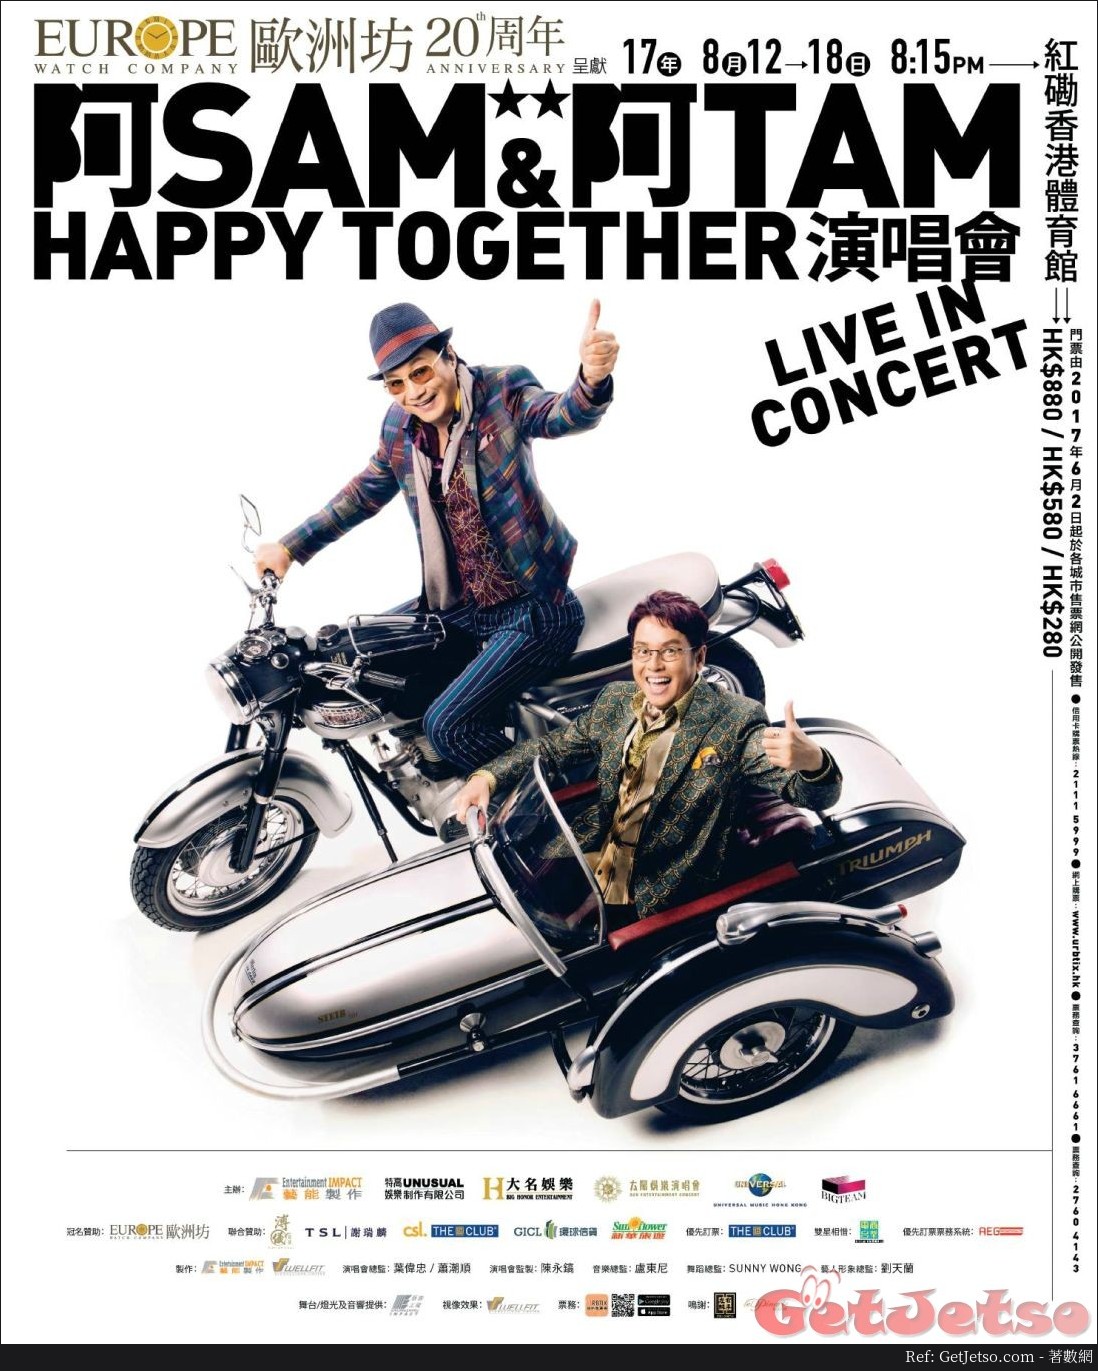 阿Sam & 阿Tam Happy Together演唱會門票公開發售(17年6月2日起)圖片1